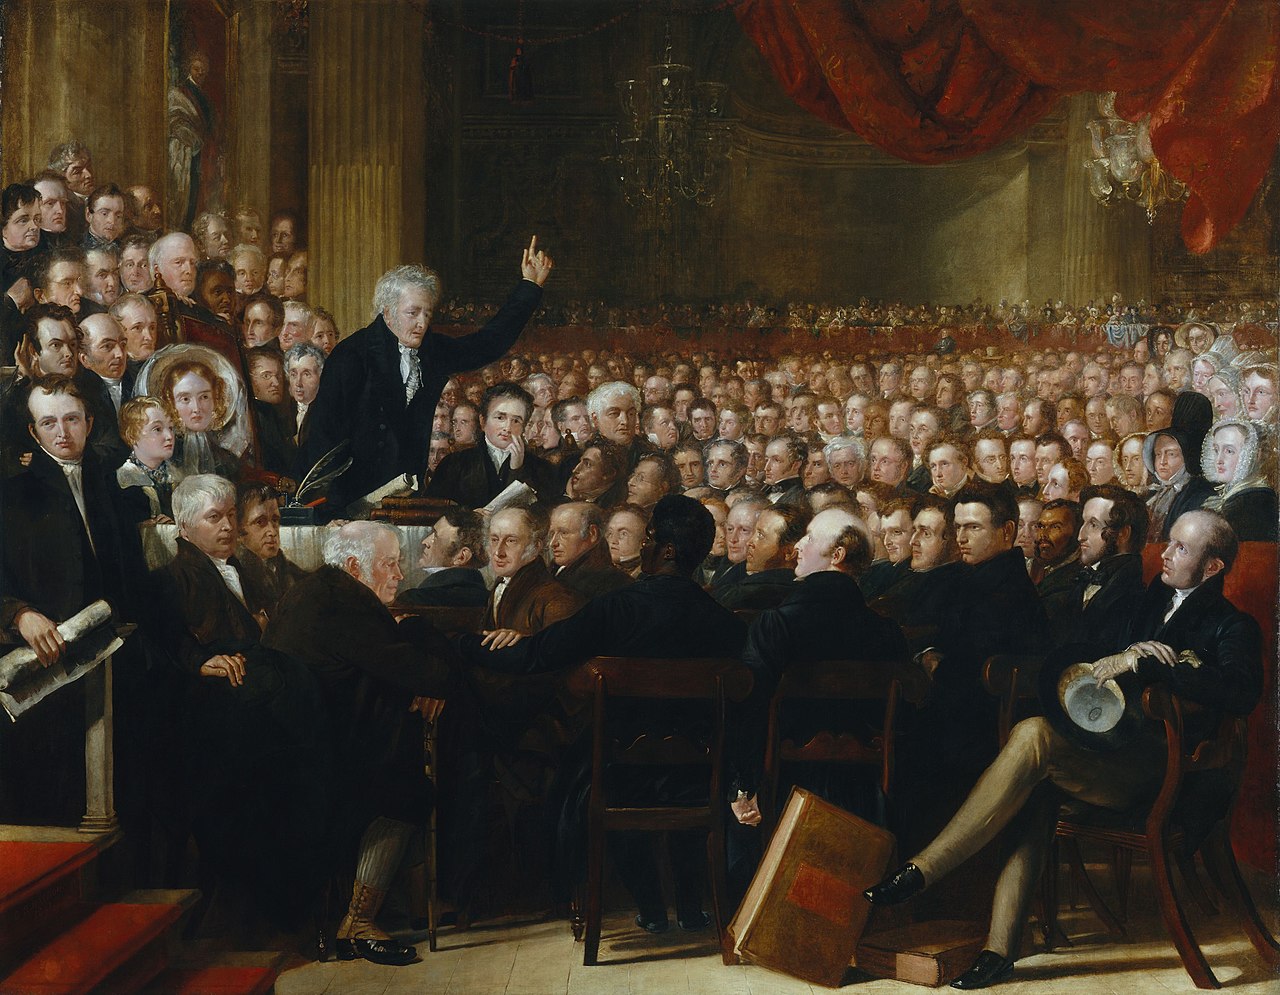 The Anti Slavery Society Convention, 1840, by Benjamin Robert Haydon